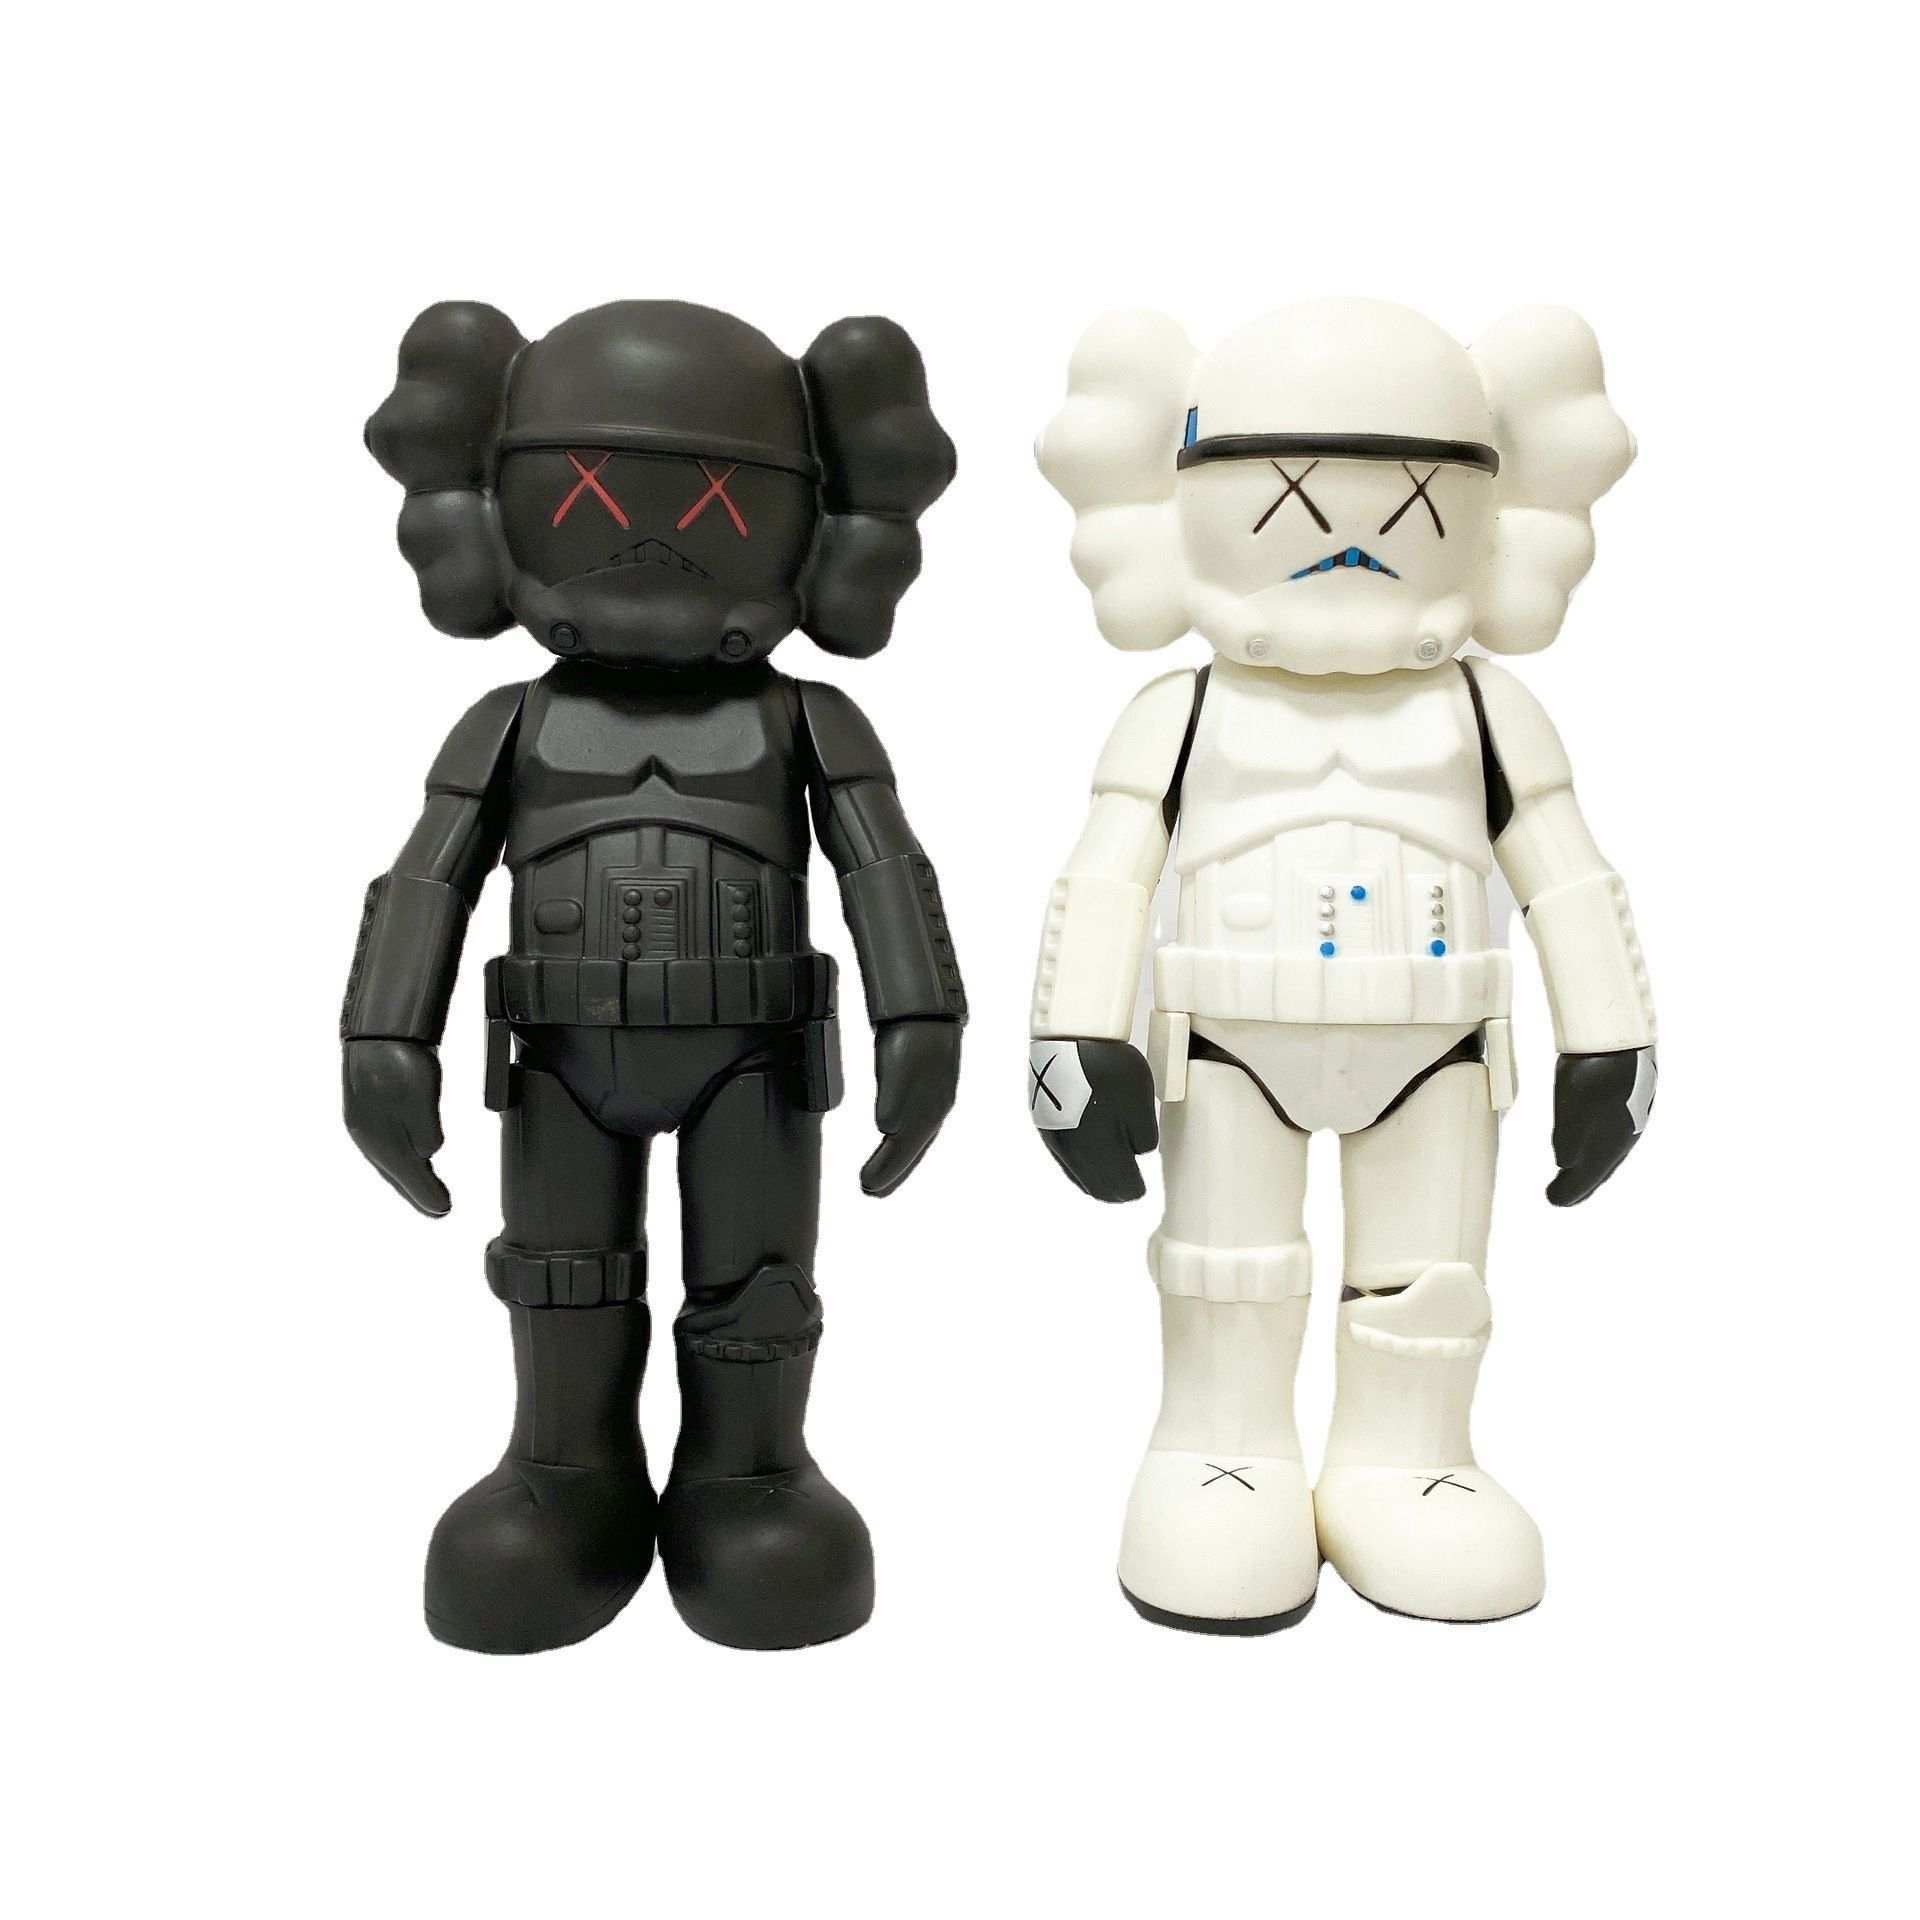 Stormtrooper Companion vinyl figure by KAWS